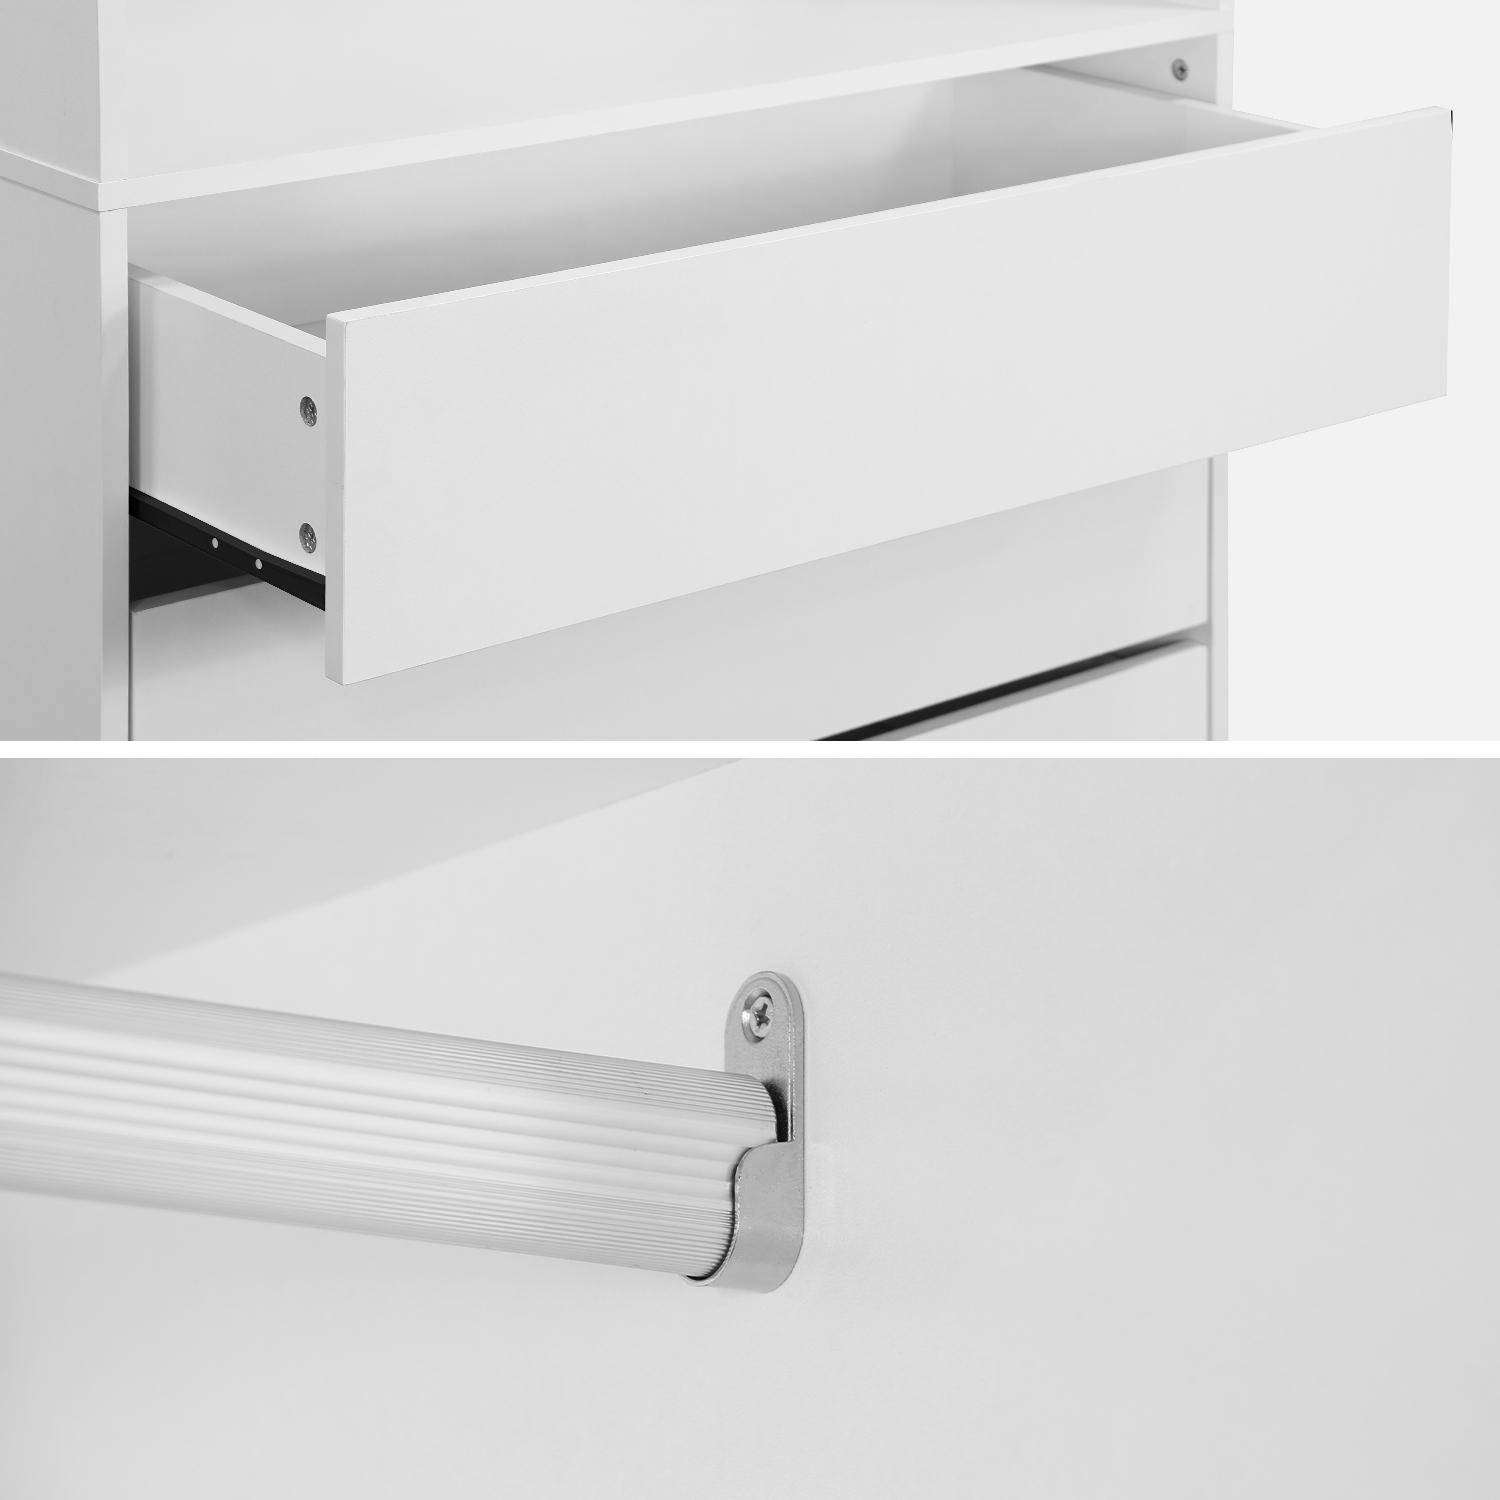 Modular open wardrobe drawer and rail unit, 80x45x180cm, Modulo, 4 drawers, 1 clothes rail, White,sweeek,Photo8